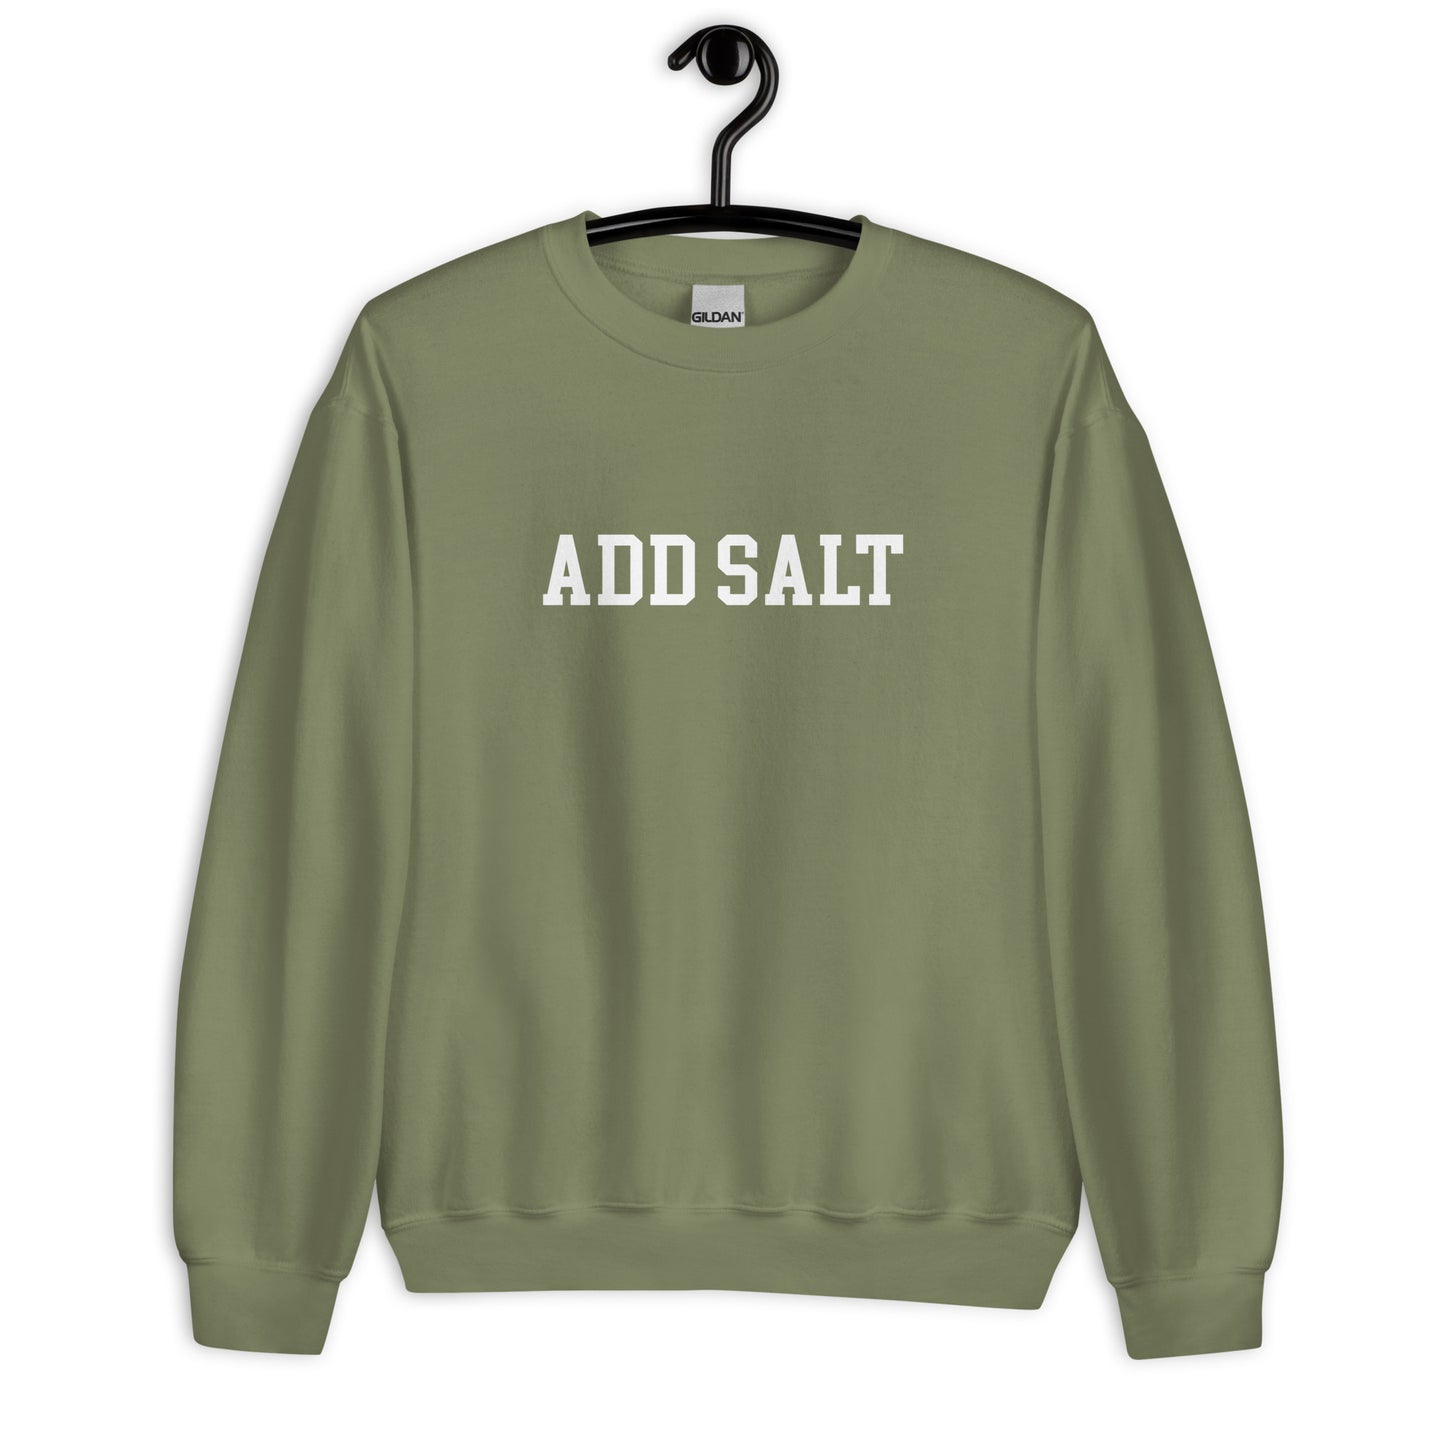 Add Salt Sweatshirt - Straight Font